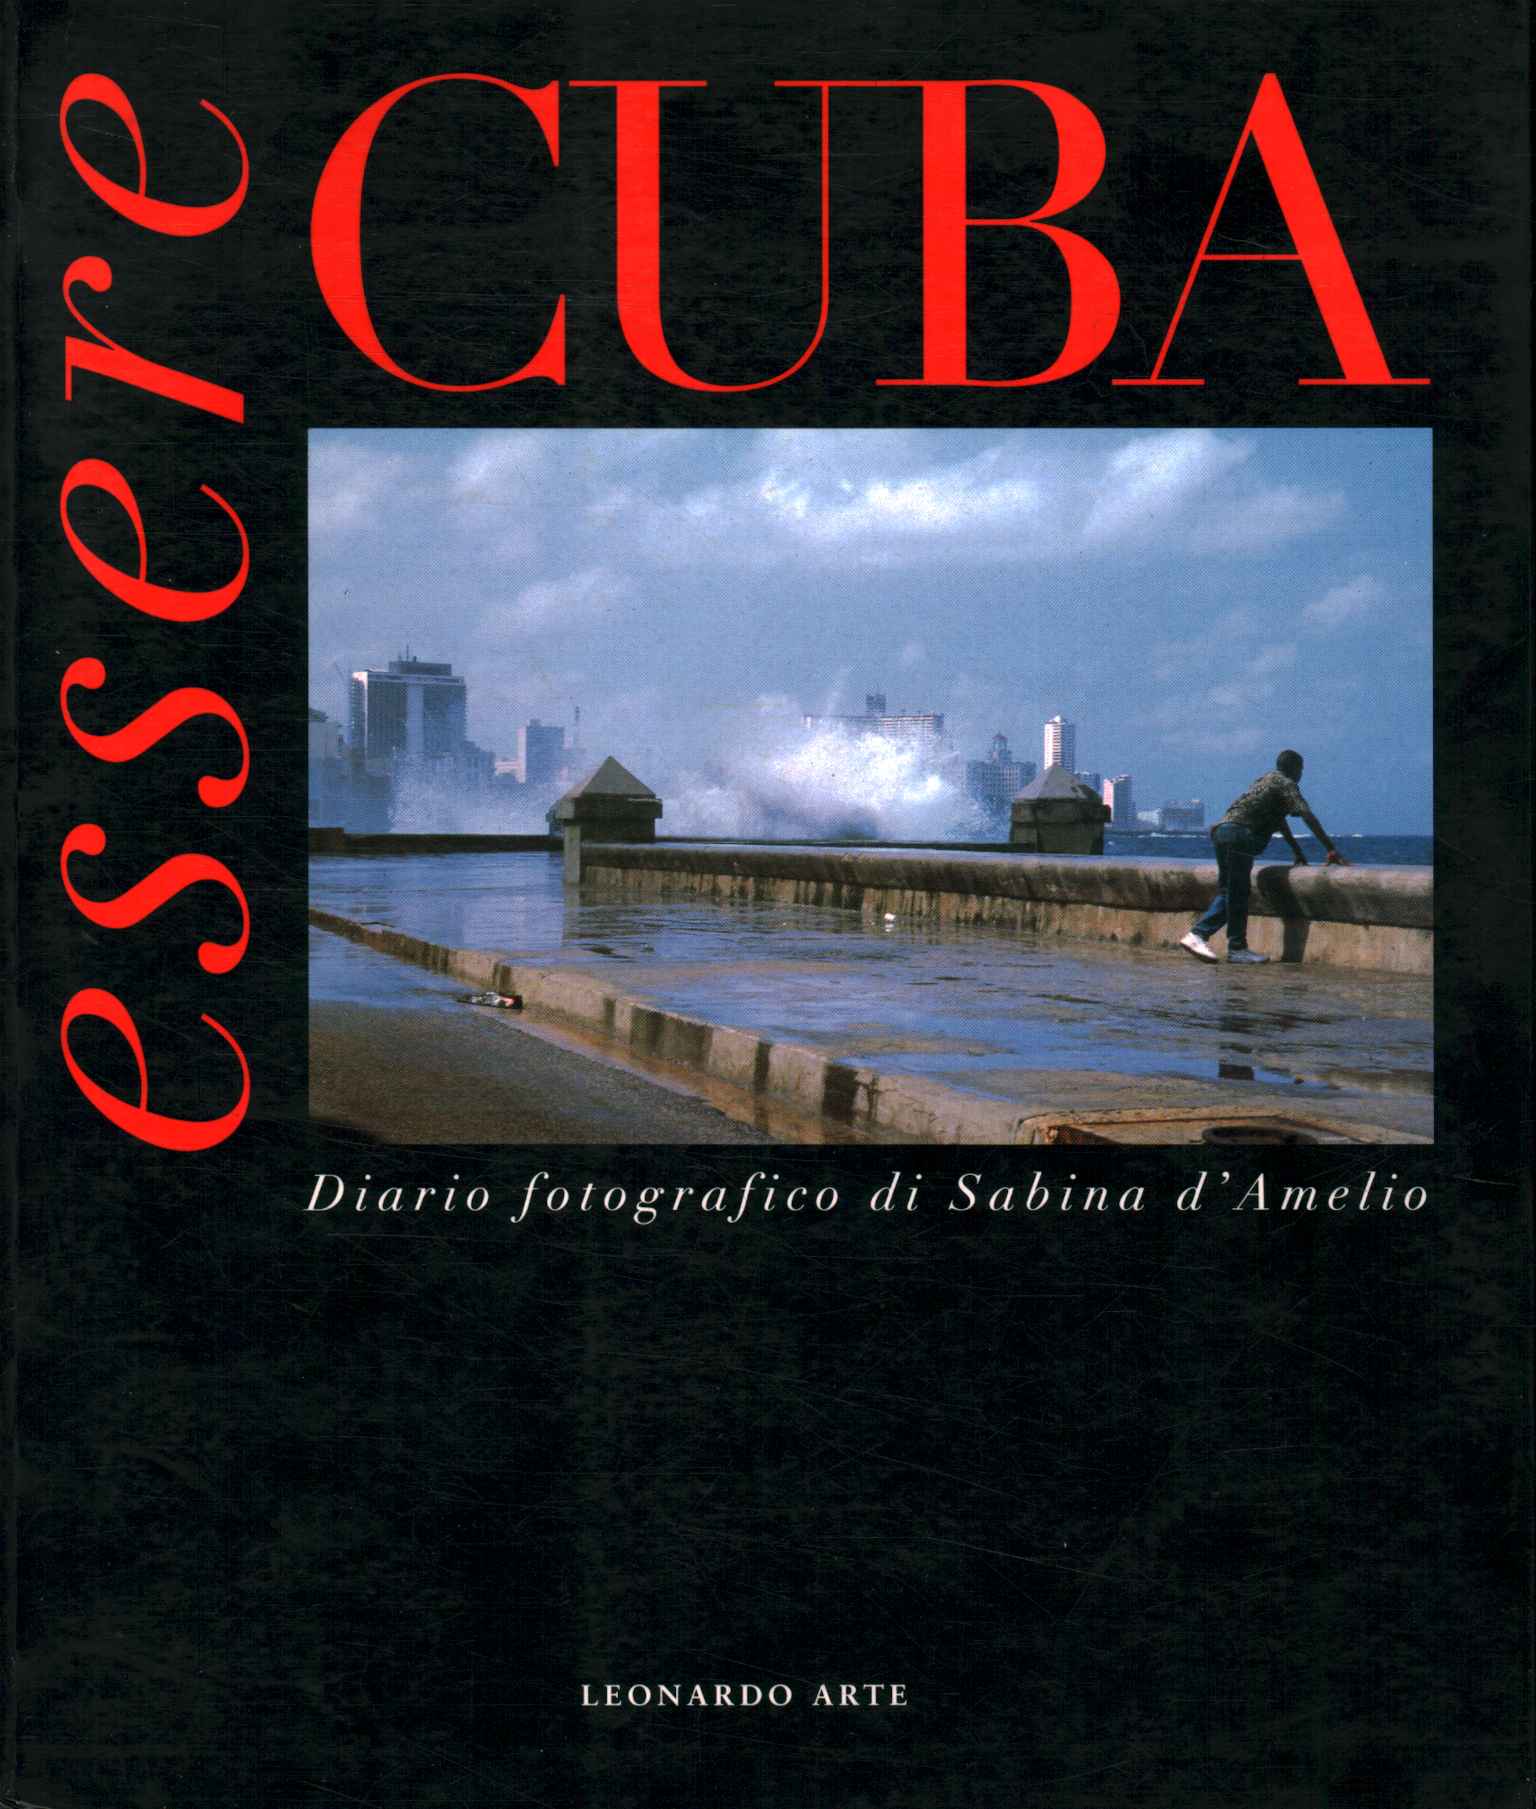 Ser Cuba